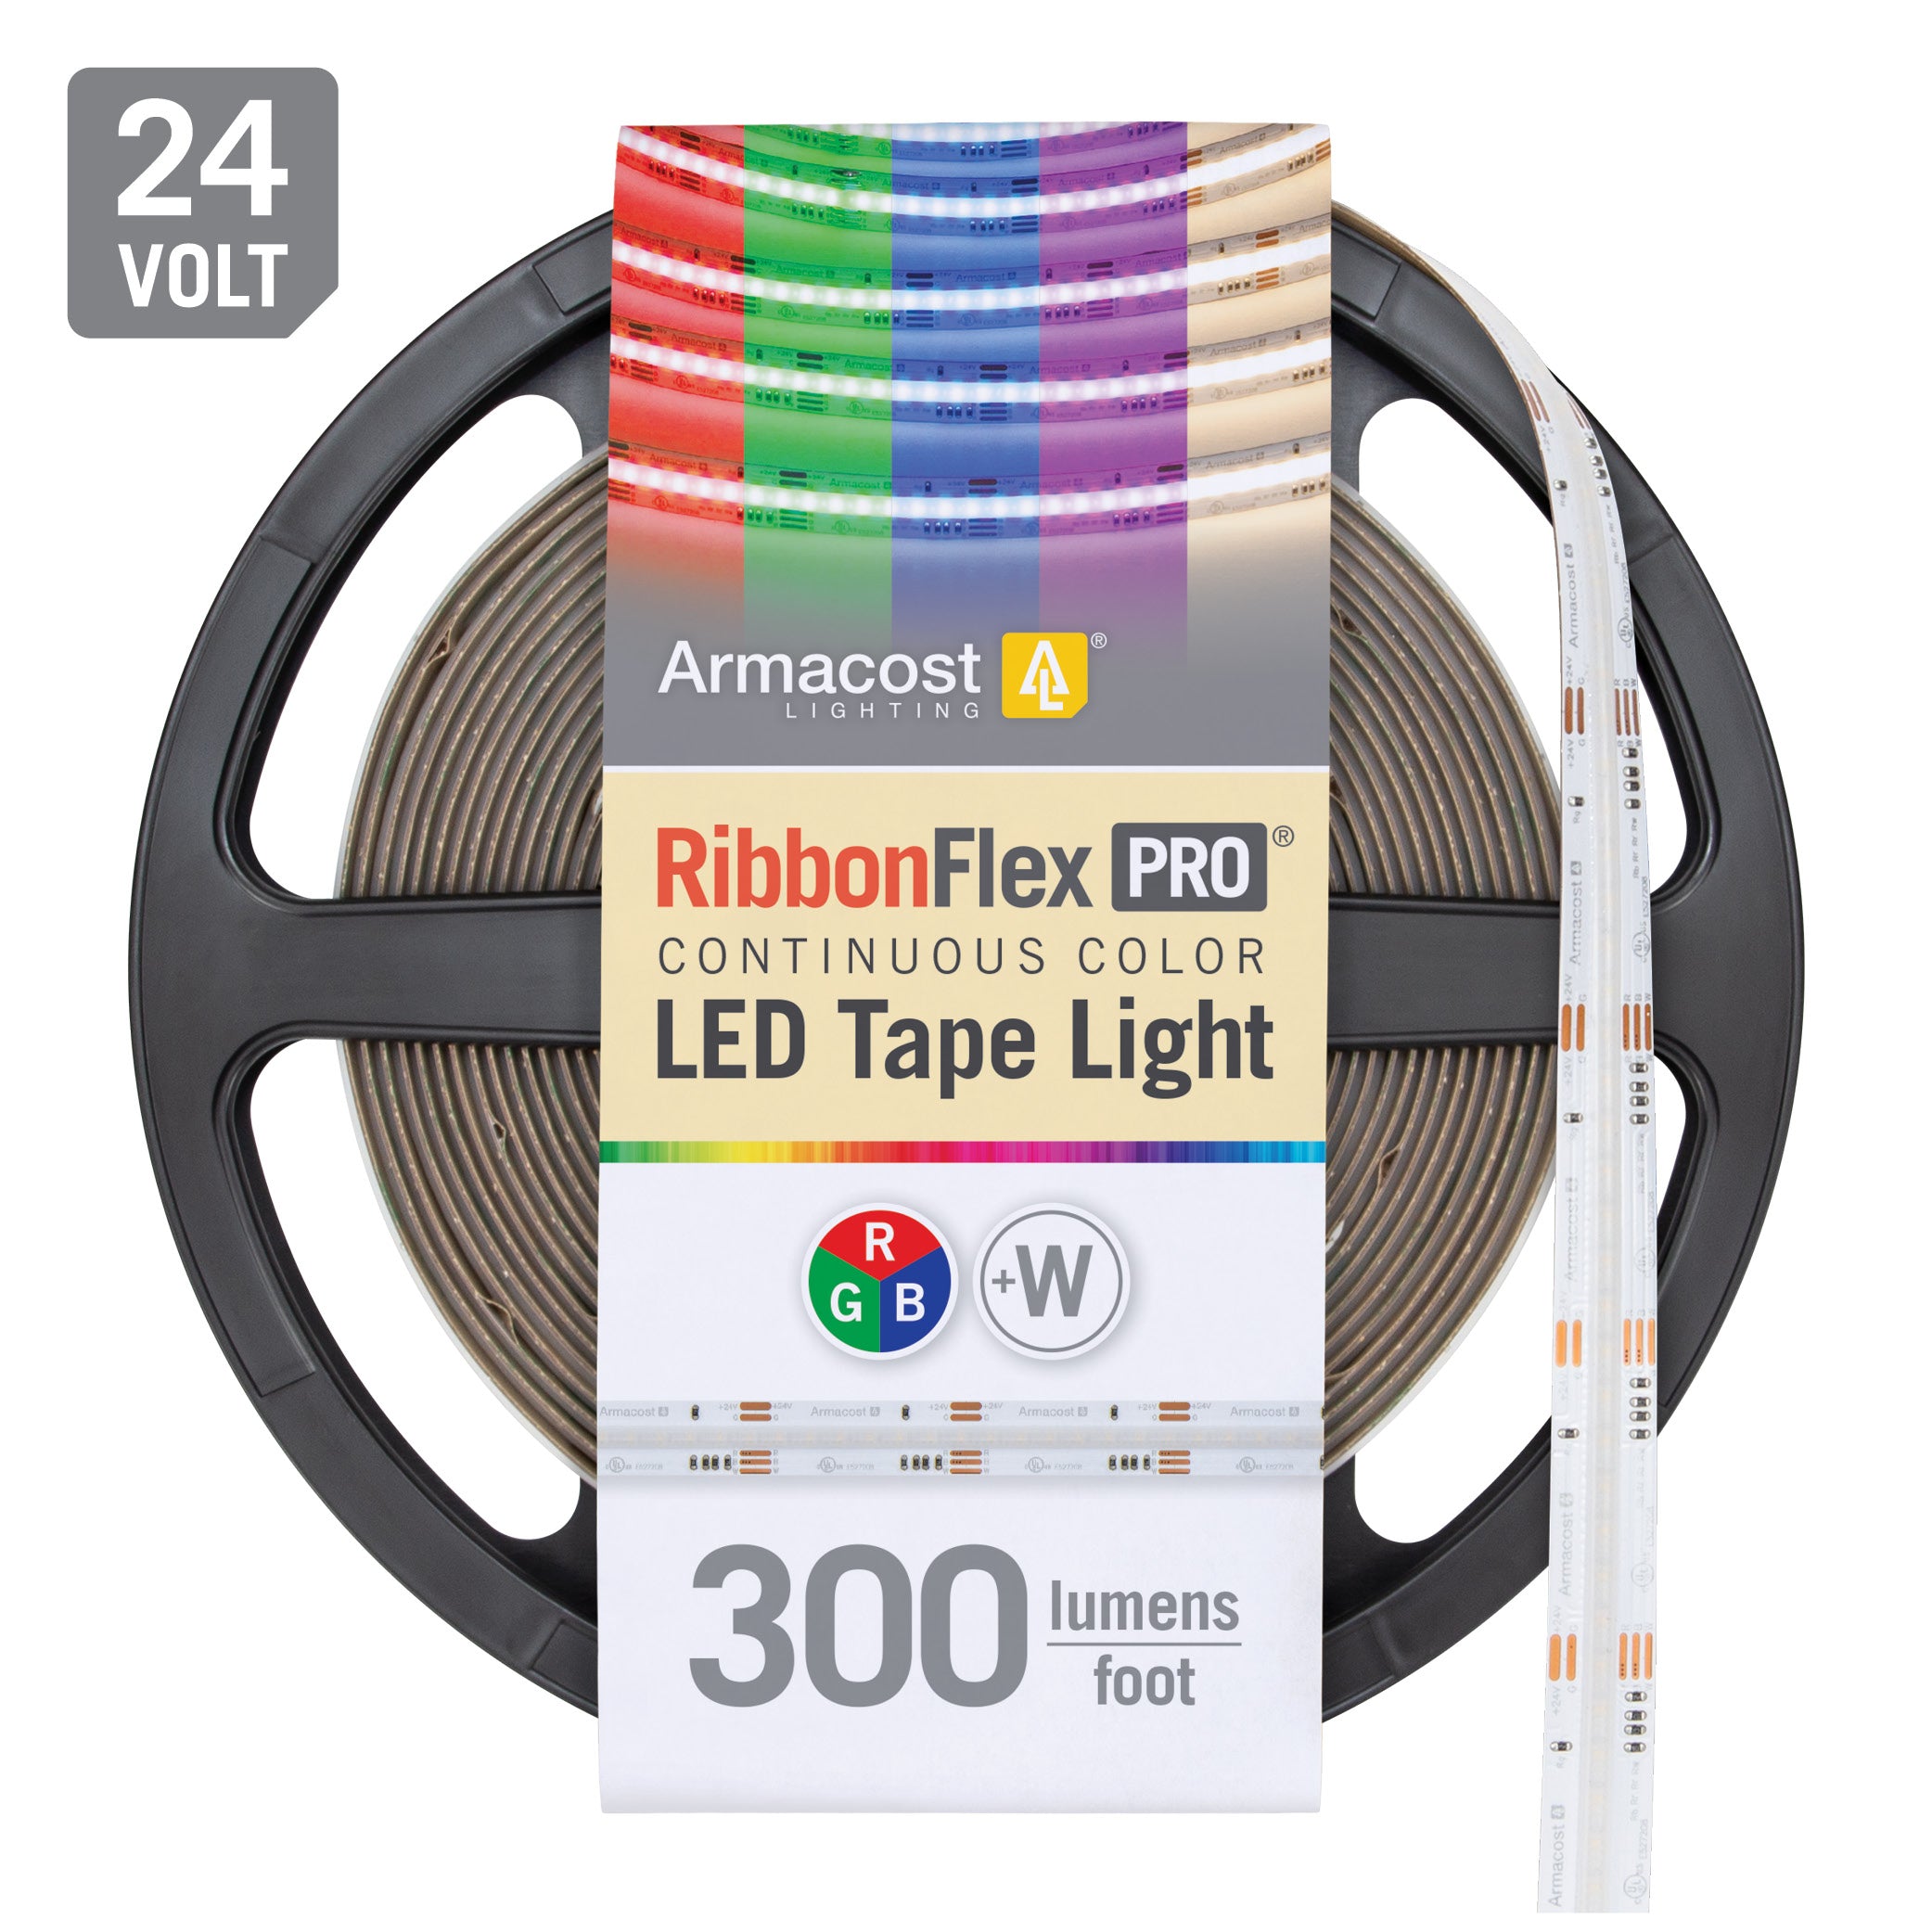 24V COB LED Strip RGB+W Tape Light – Armacost Lighting